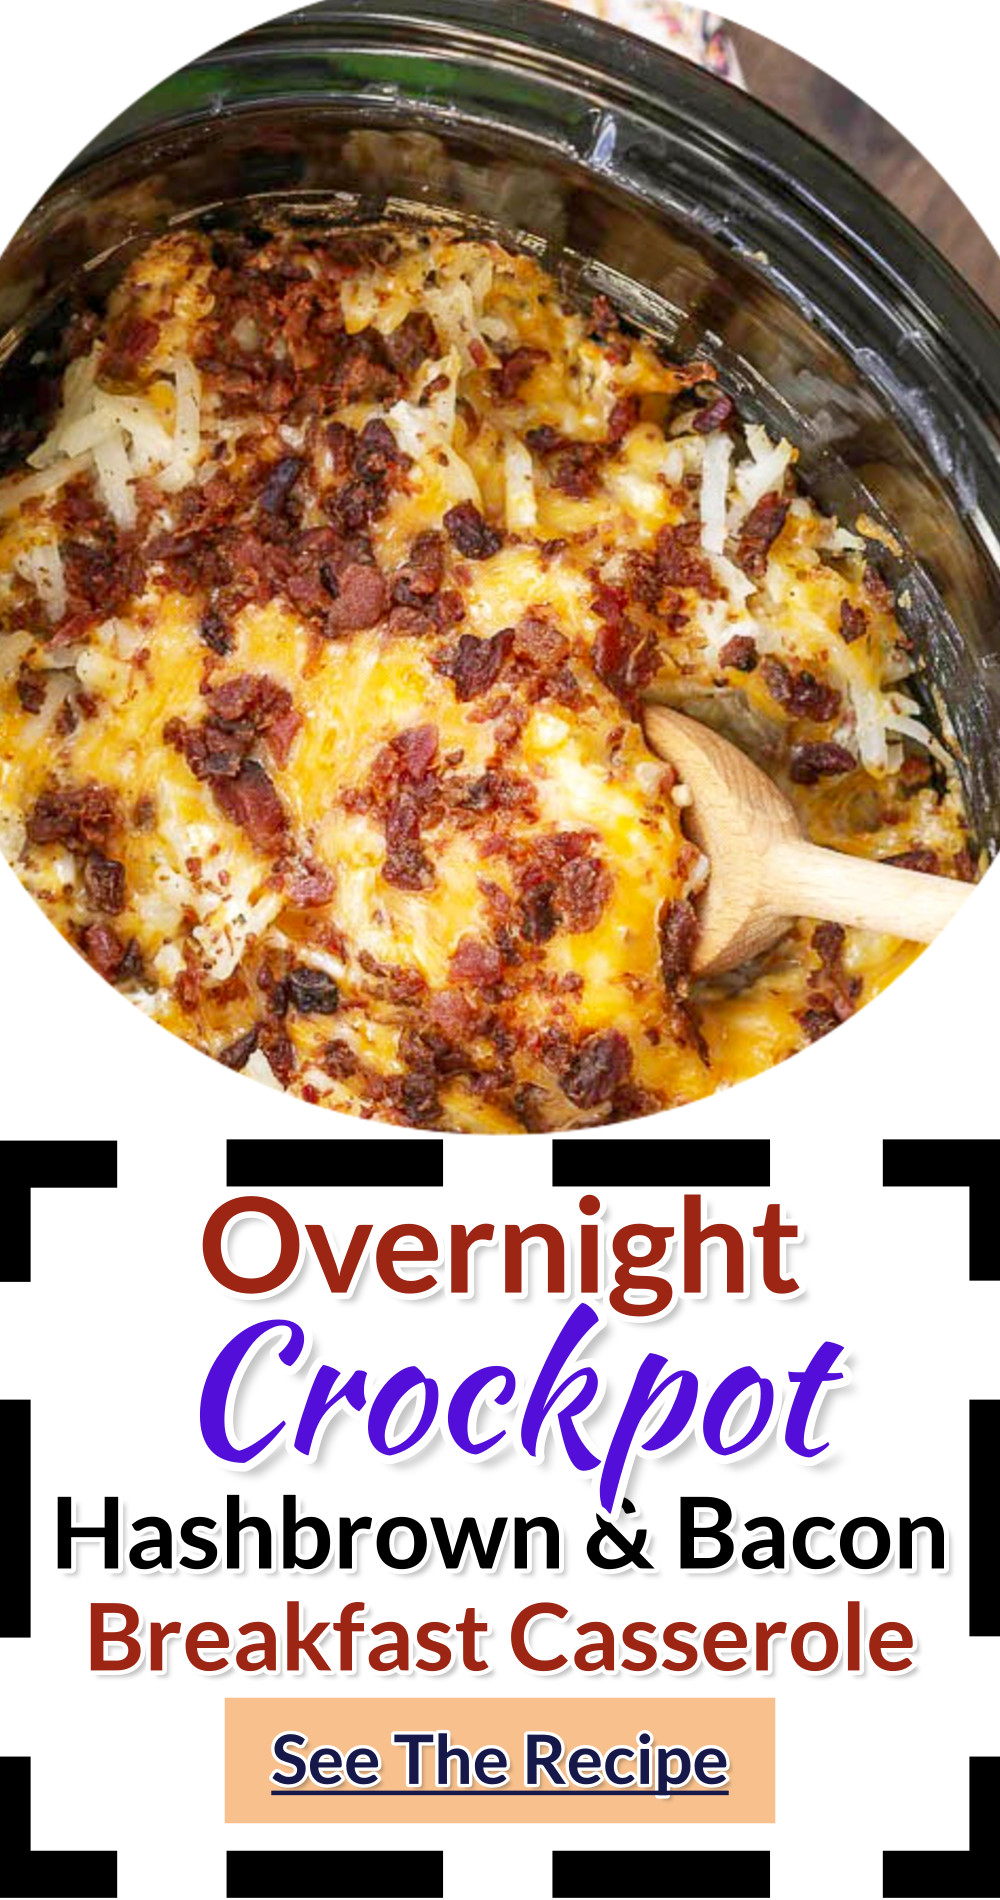 Overnight crockpot hashbrown bacon cheese breakfast casserole